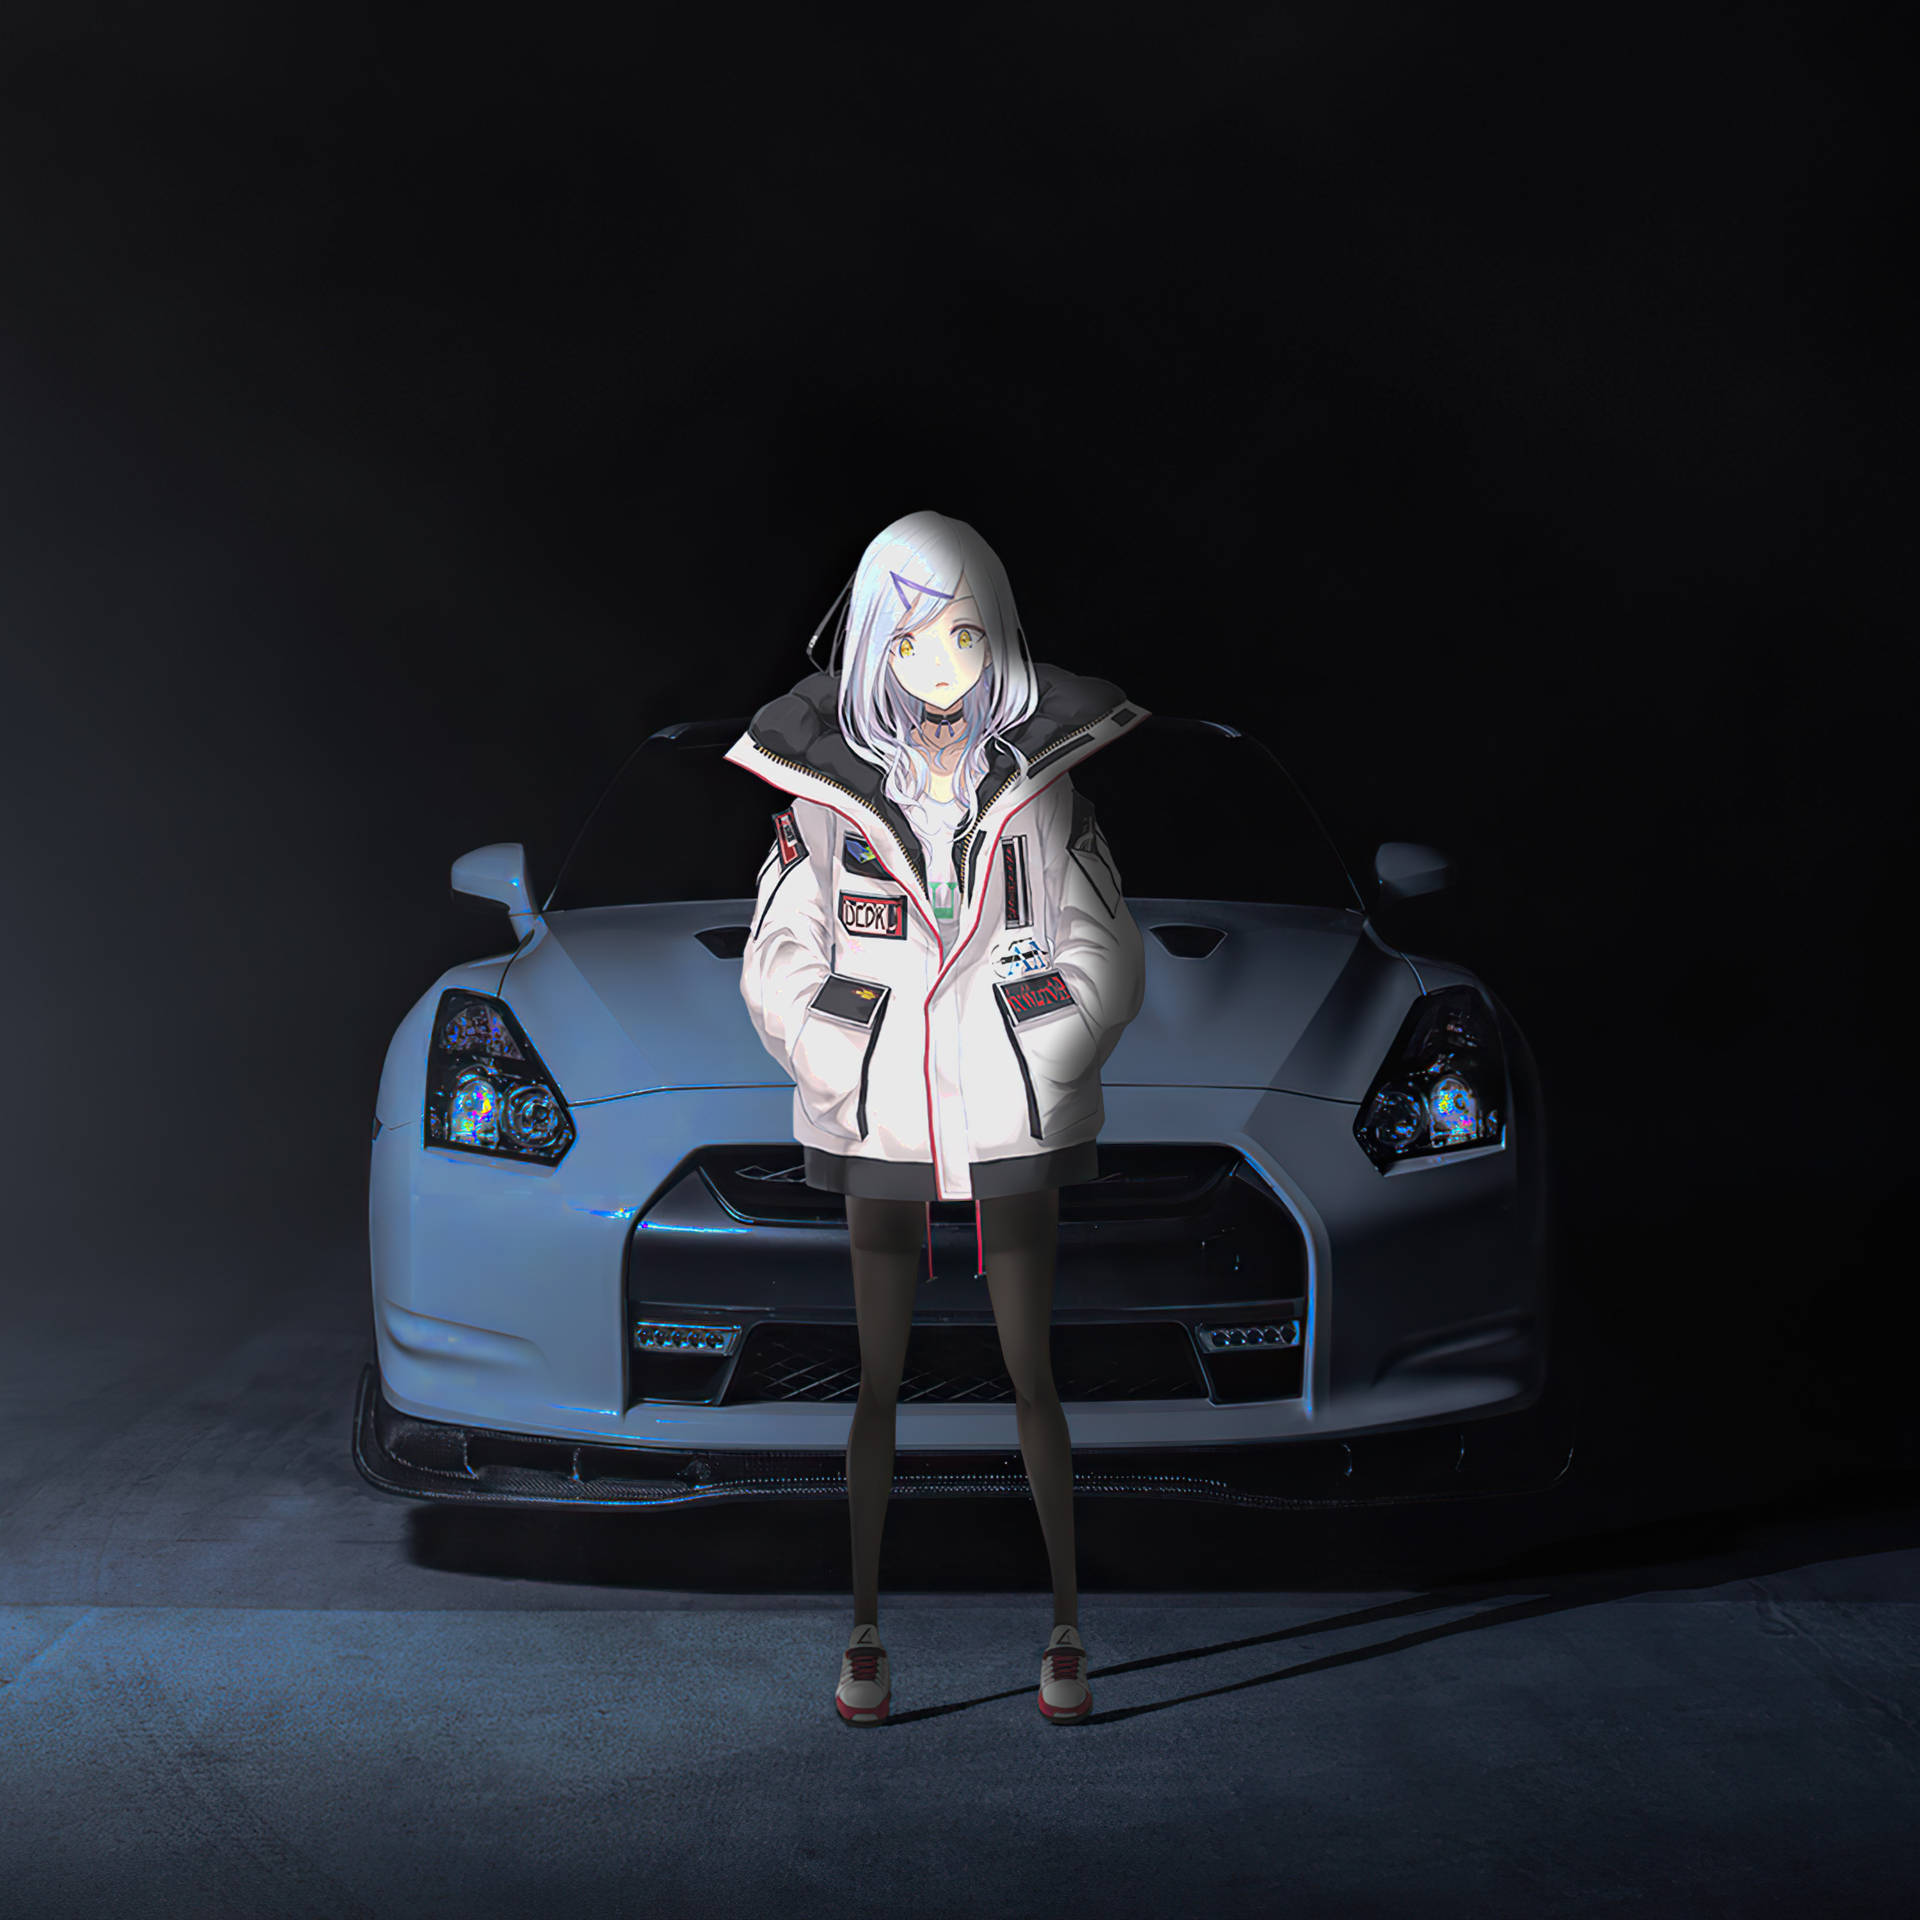 Anime Ipad Girl With Car Background